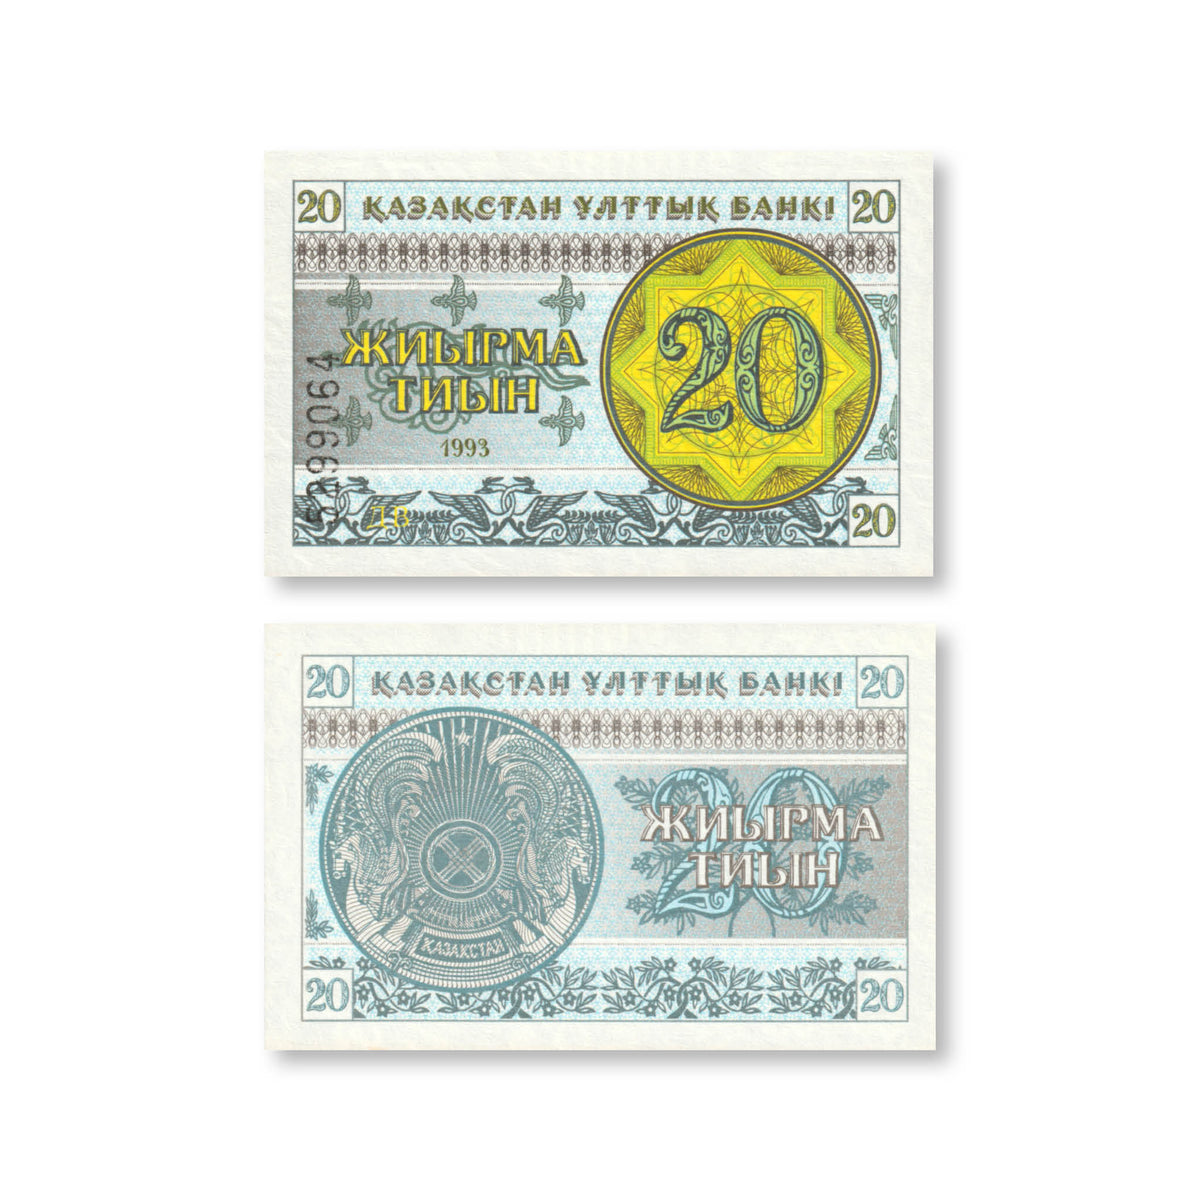 Kazakhstan 20 Tyiyn, 1993, B105a2, P5a, UNC - Robert's World Money - World Banknotes